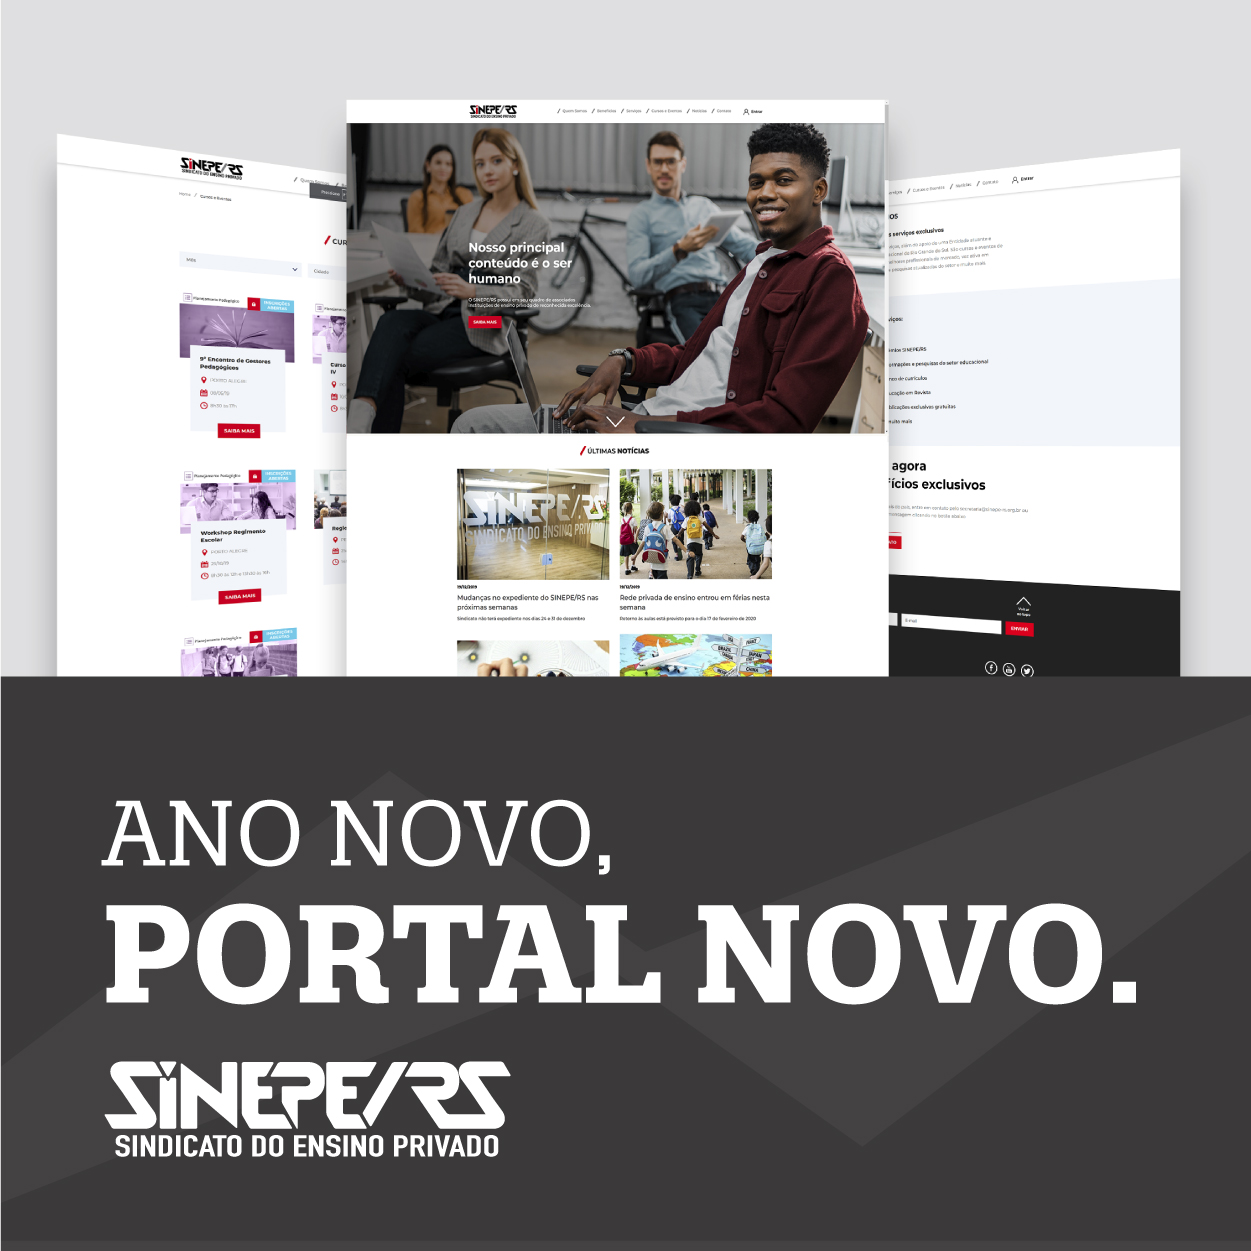 SINEPE/RS lança novo portal